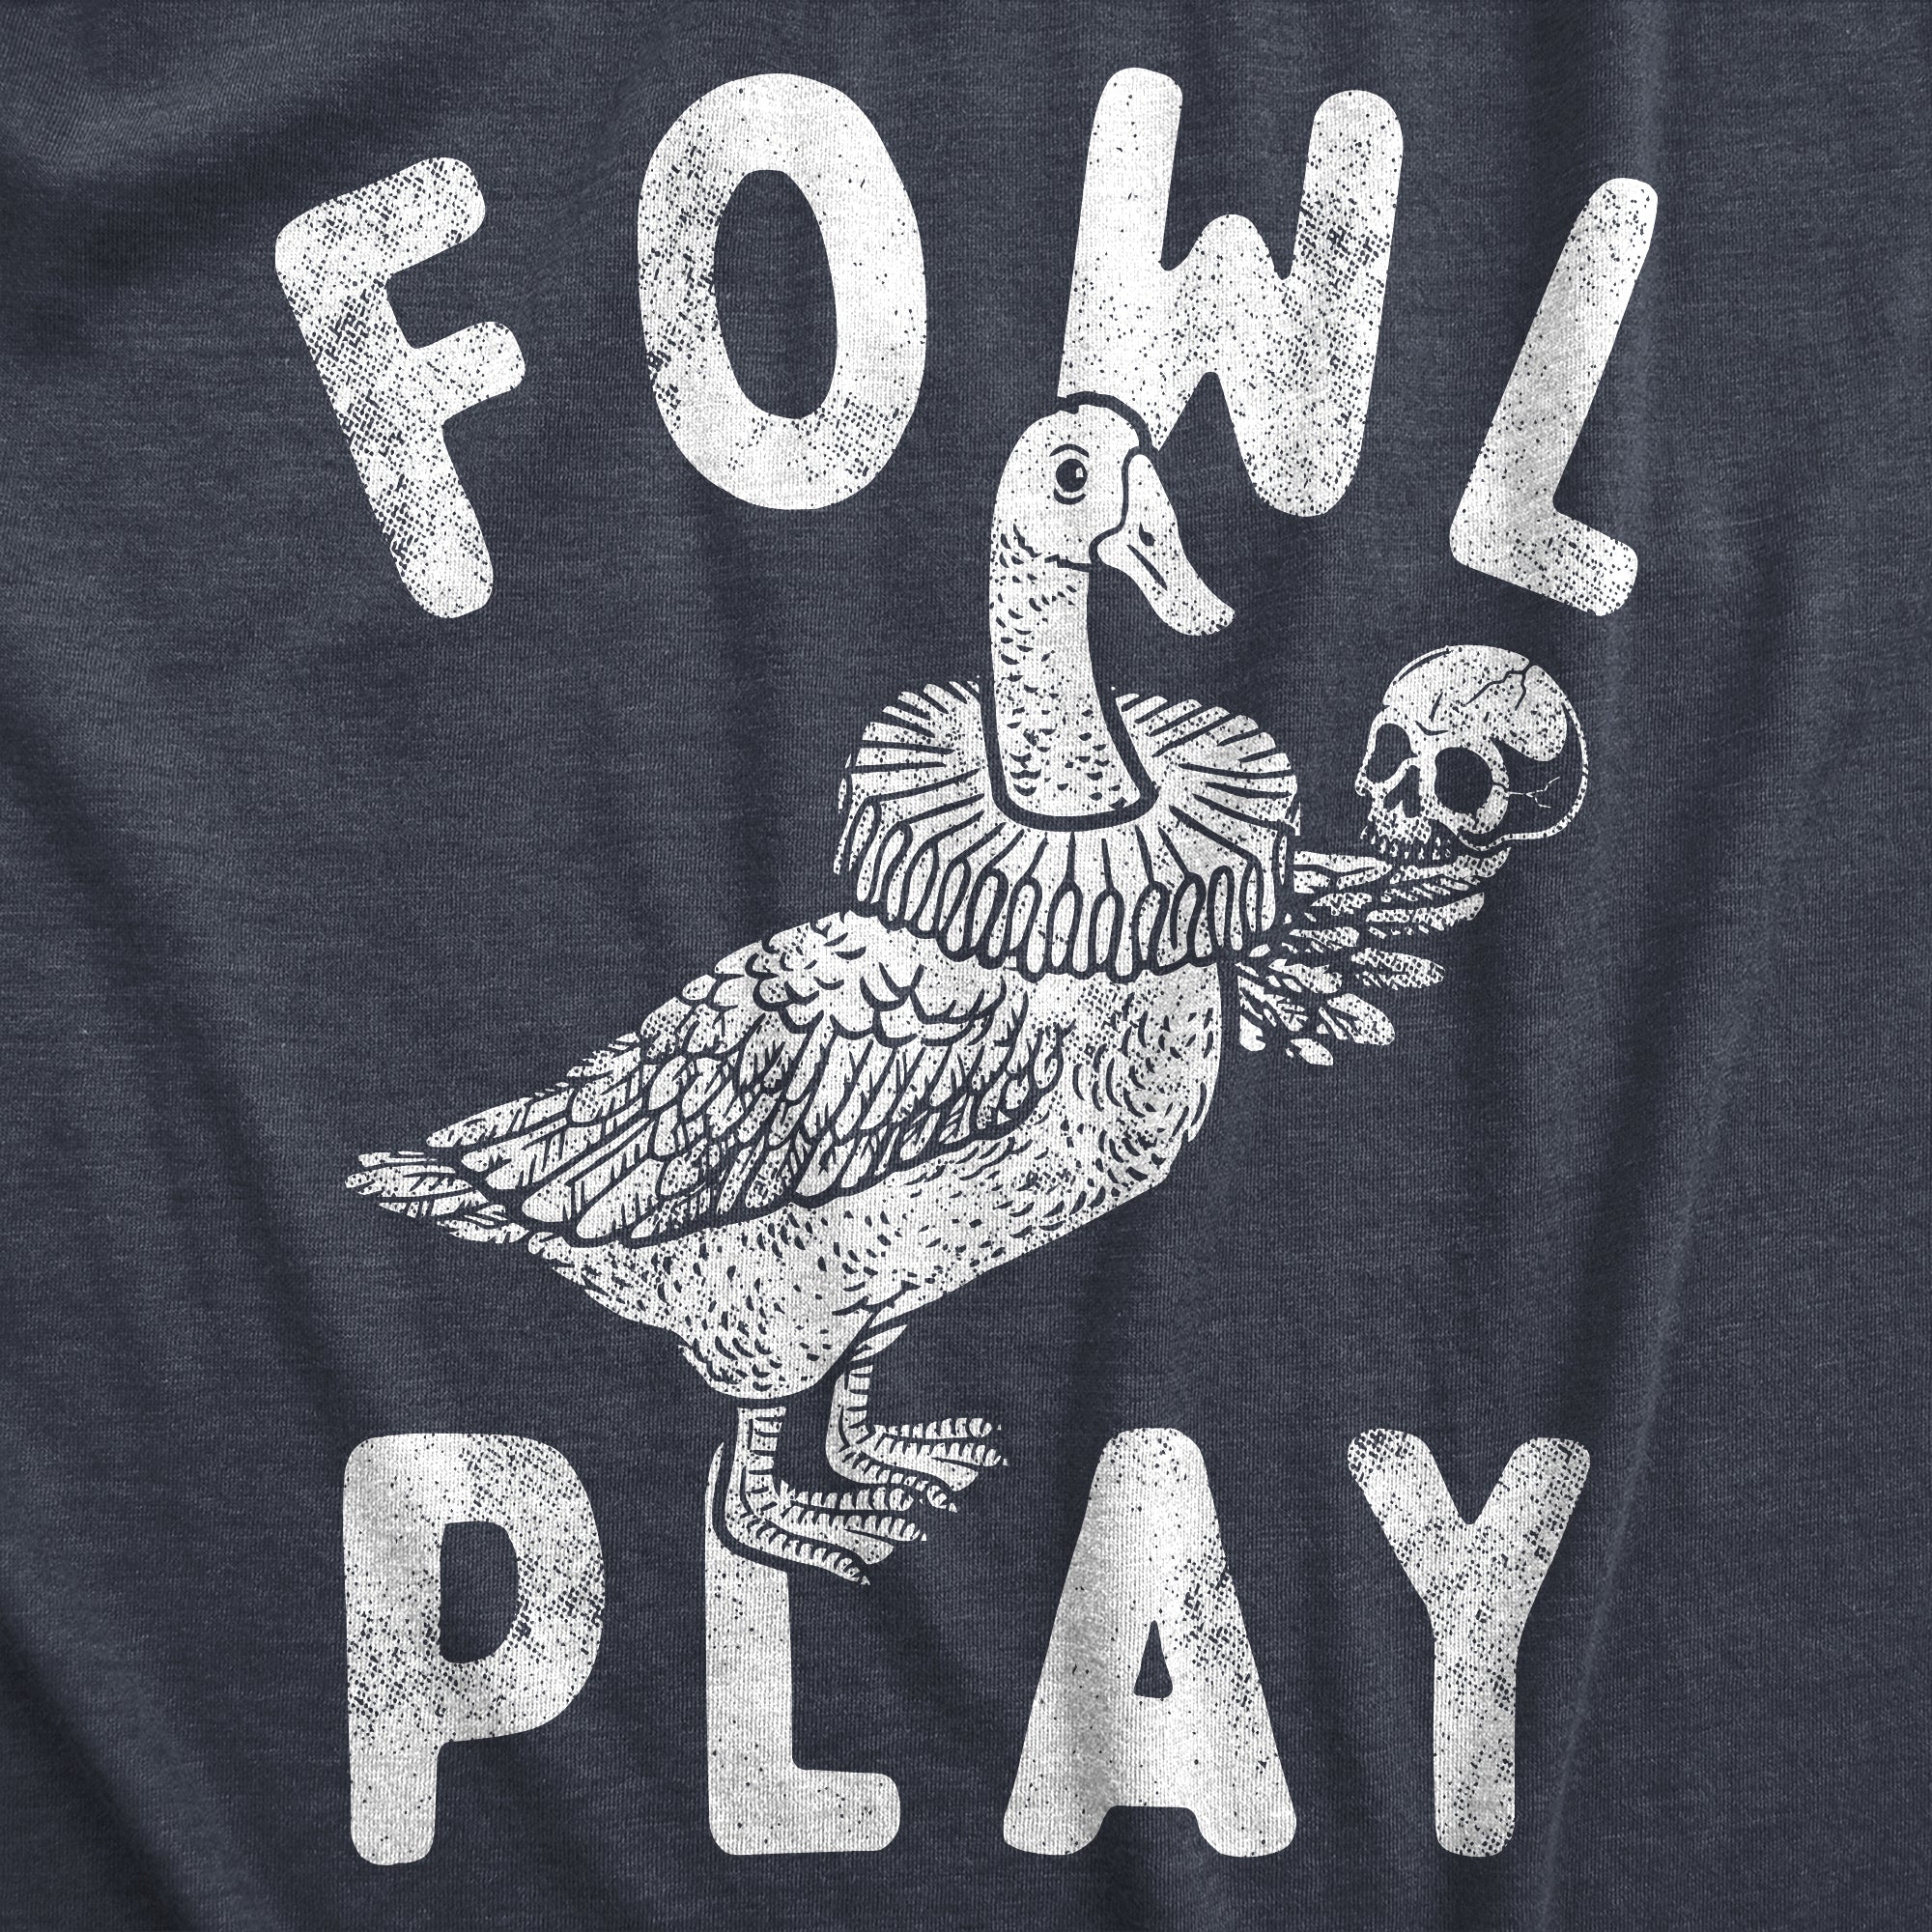 Funny Heather Navy - FOWL Fowl Play Mens T Shirt Nerdy Sarcastic Animal Tee